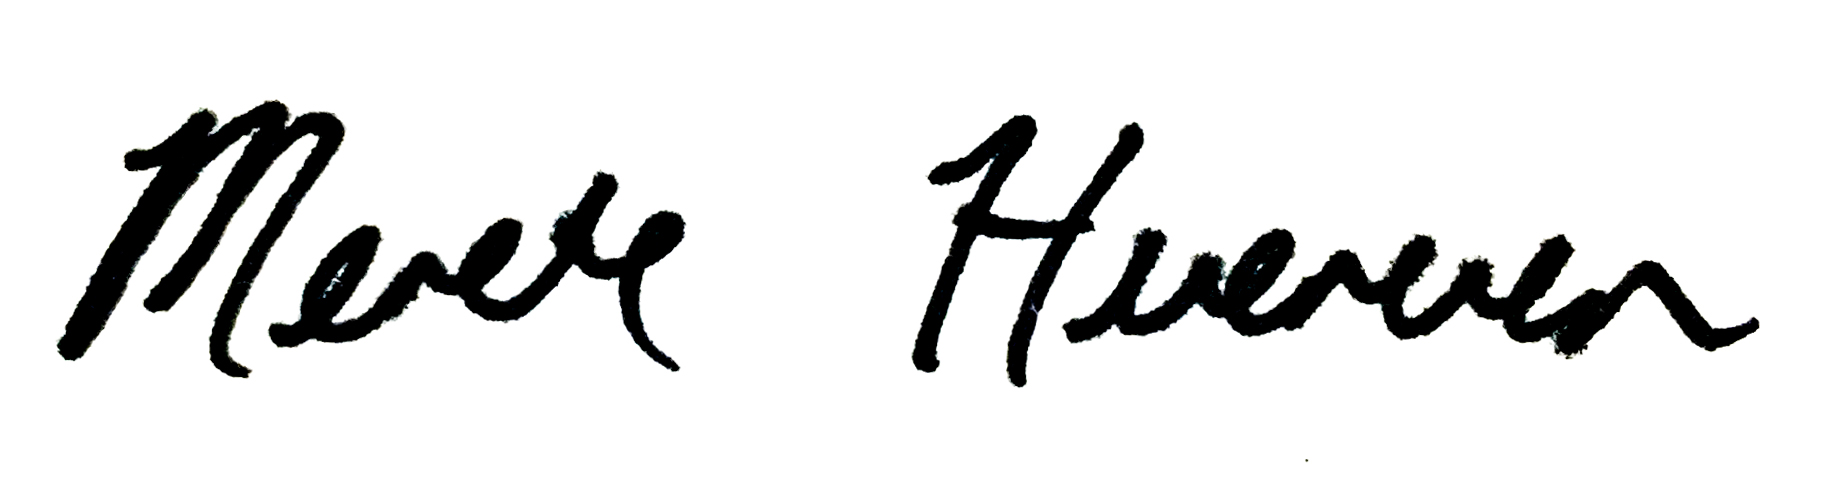 Merete-Hverven-signature.jpg